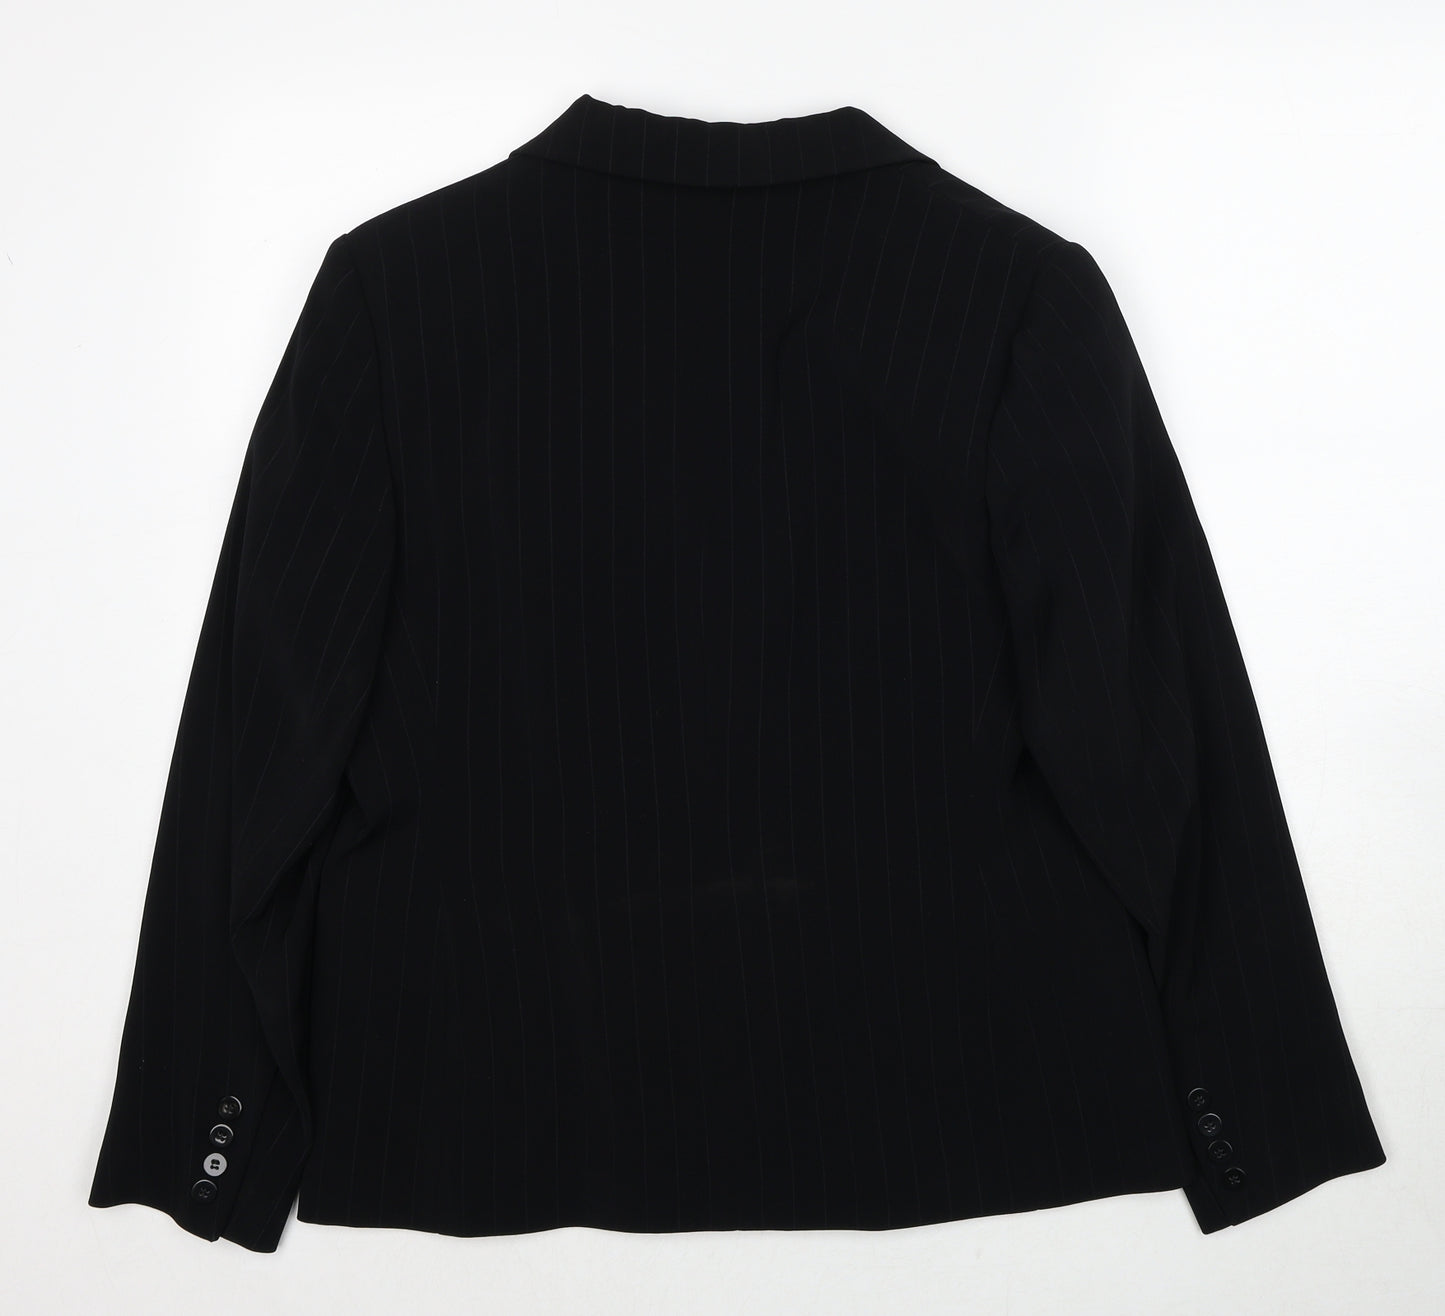 AMARANTO Womens Black Polyester Jacket Blazer Size 16